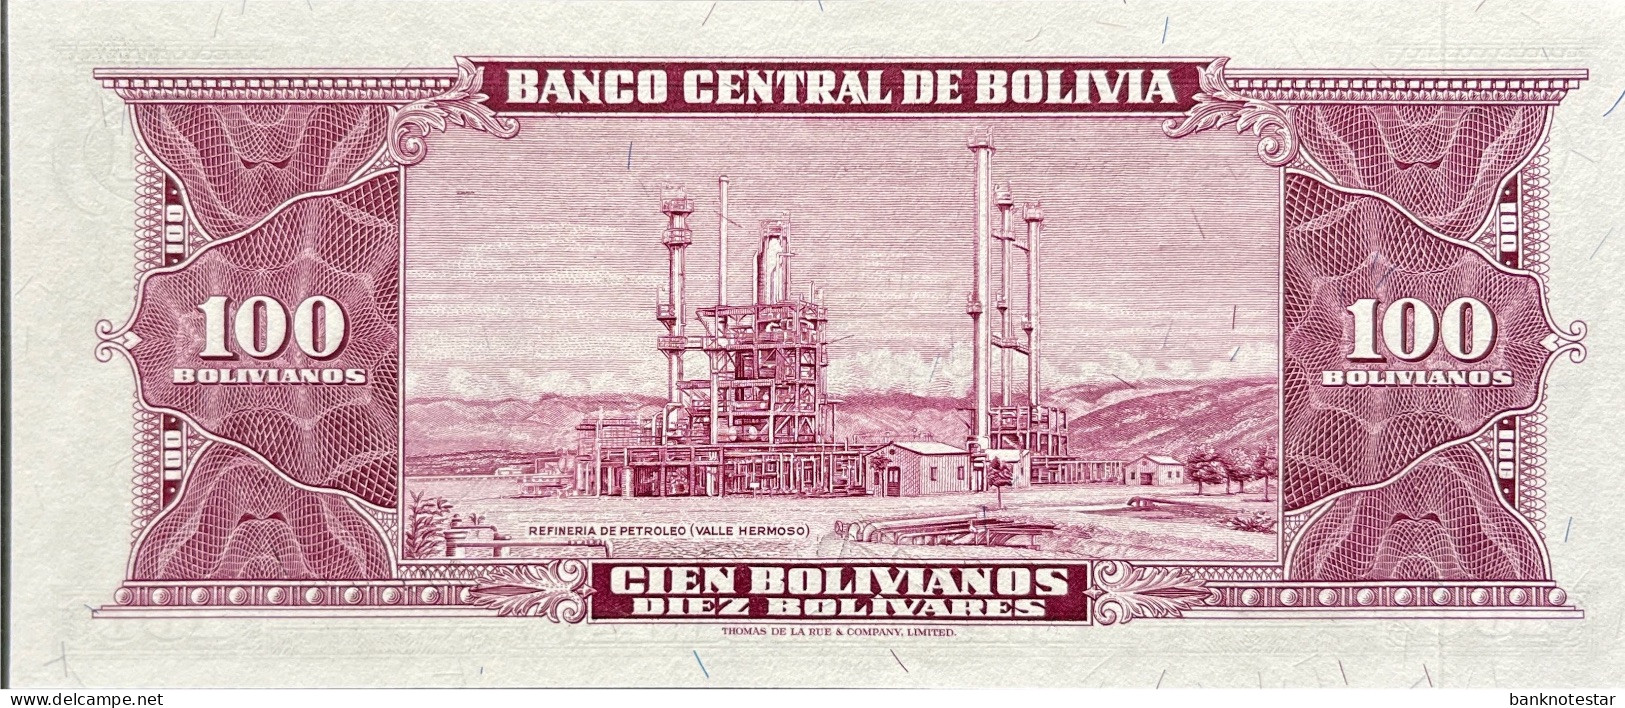 Bolivia 100 Bolivianos, P-147 (L.1945) - UNC - Bolivien